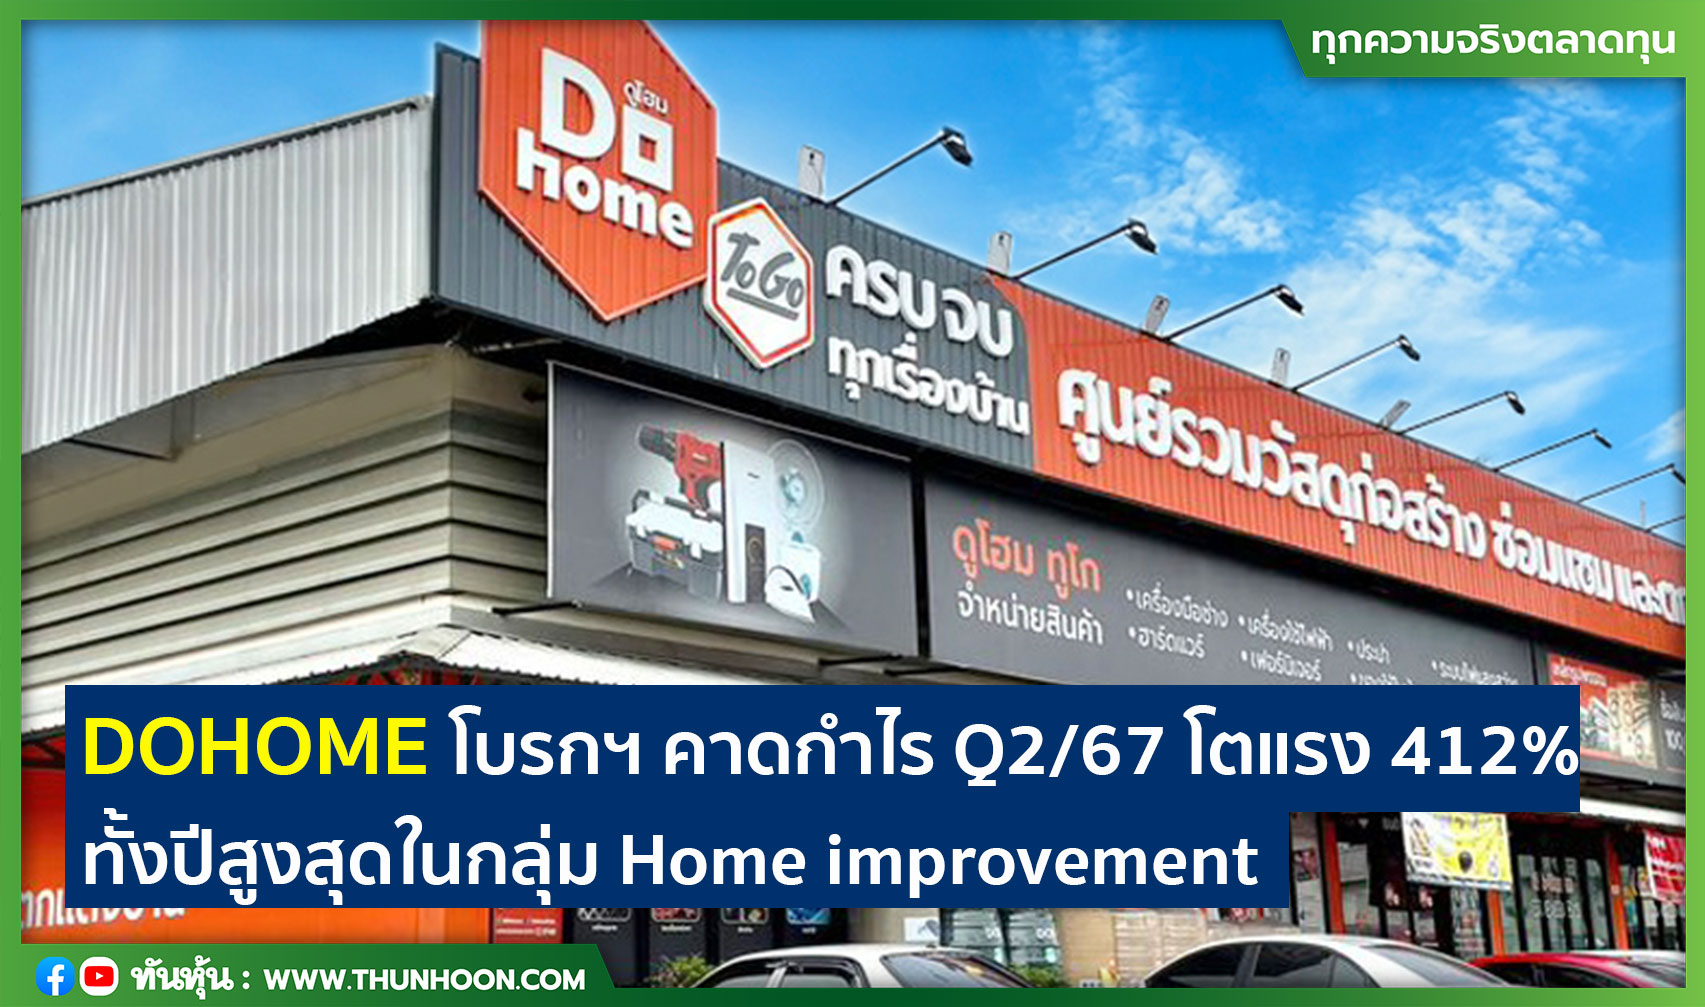 DOHOME โบรกฯ คาดกำไร Q2/67 โตแรง 412% ทั้งปีสูงสุดในกลุ่ม Home improvement